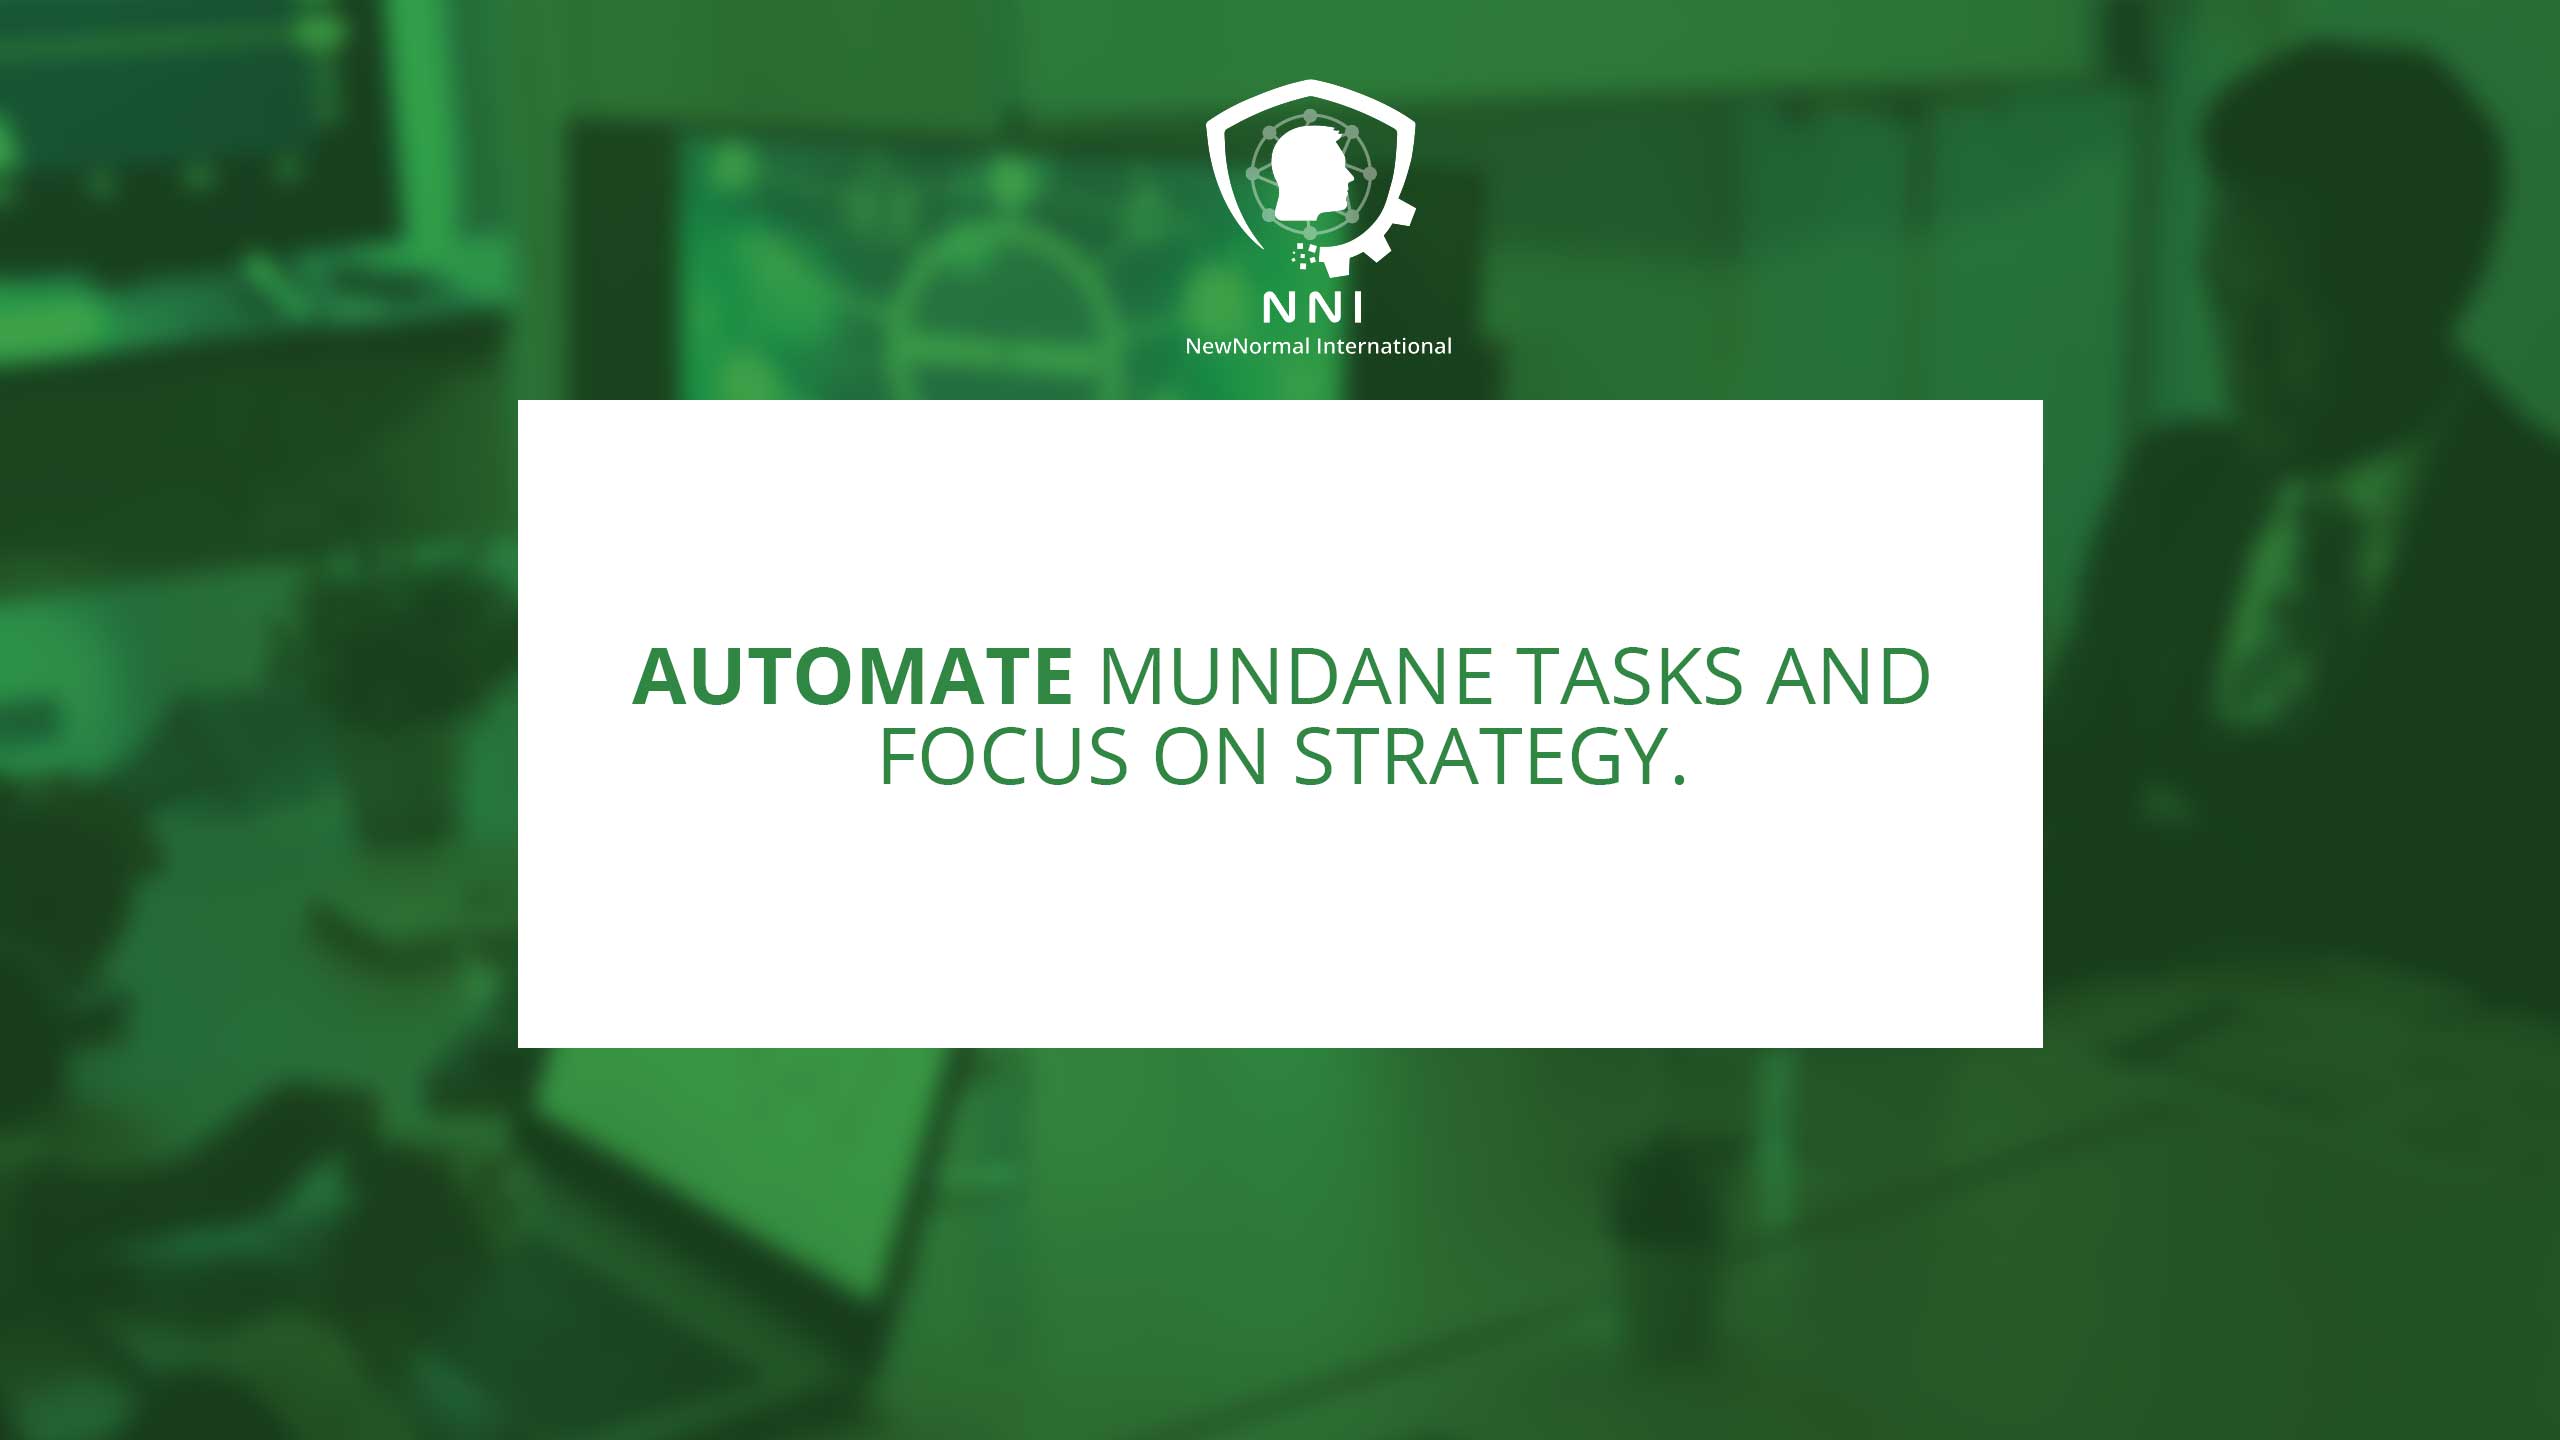 Automating Mundane Tasks for Strategic Focus